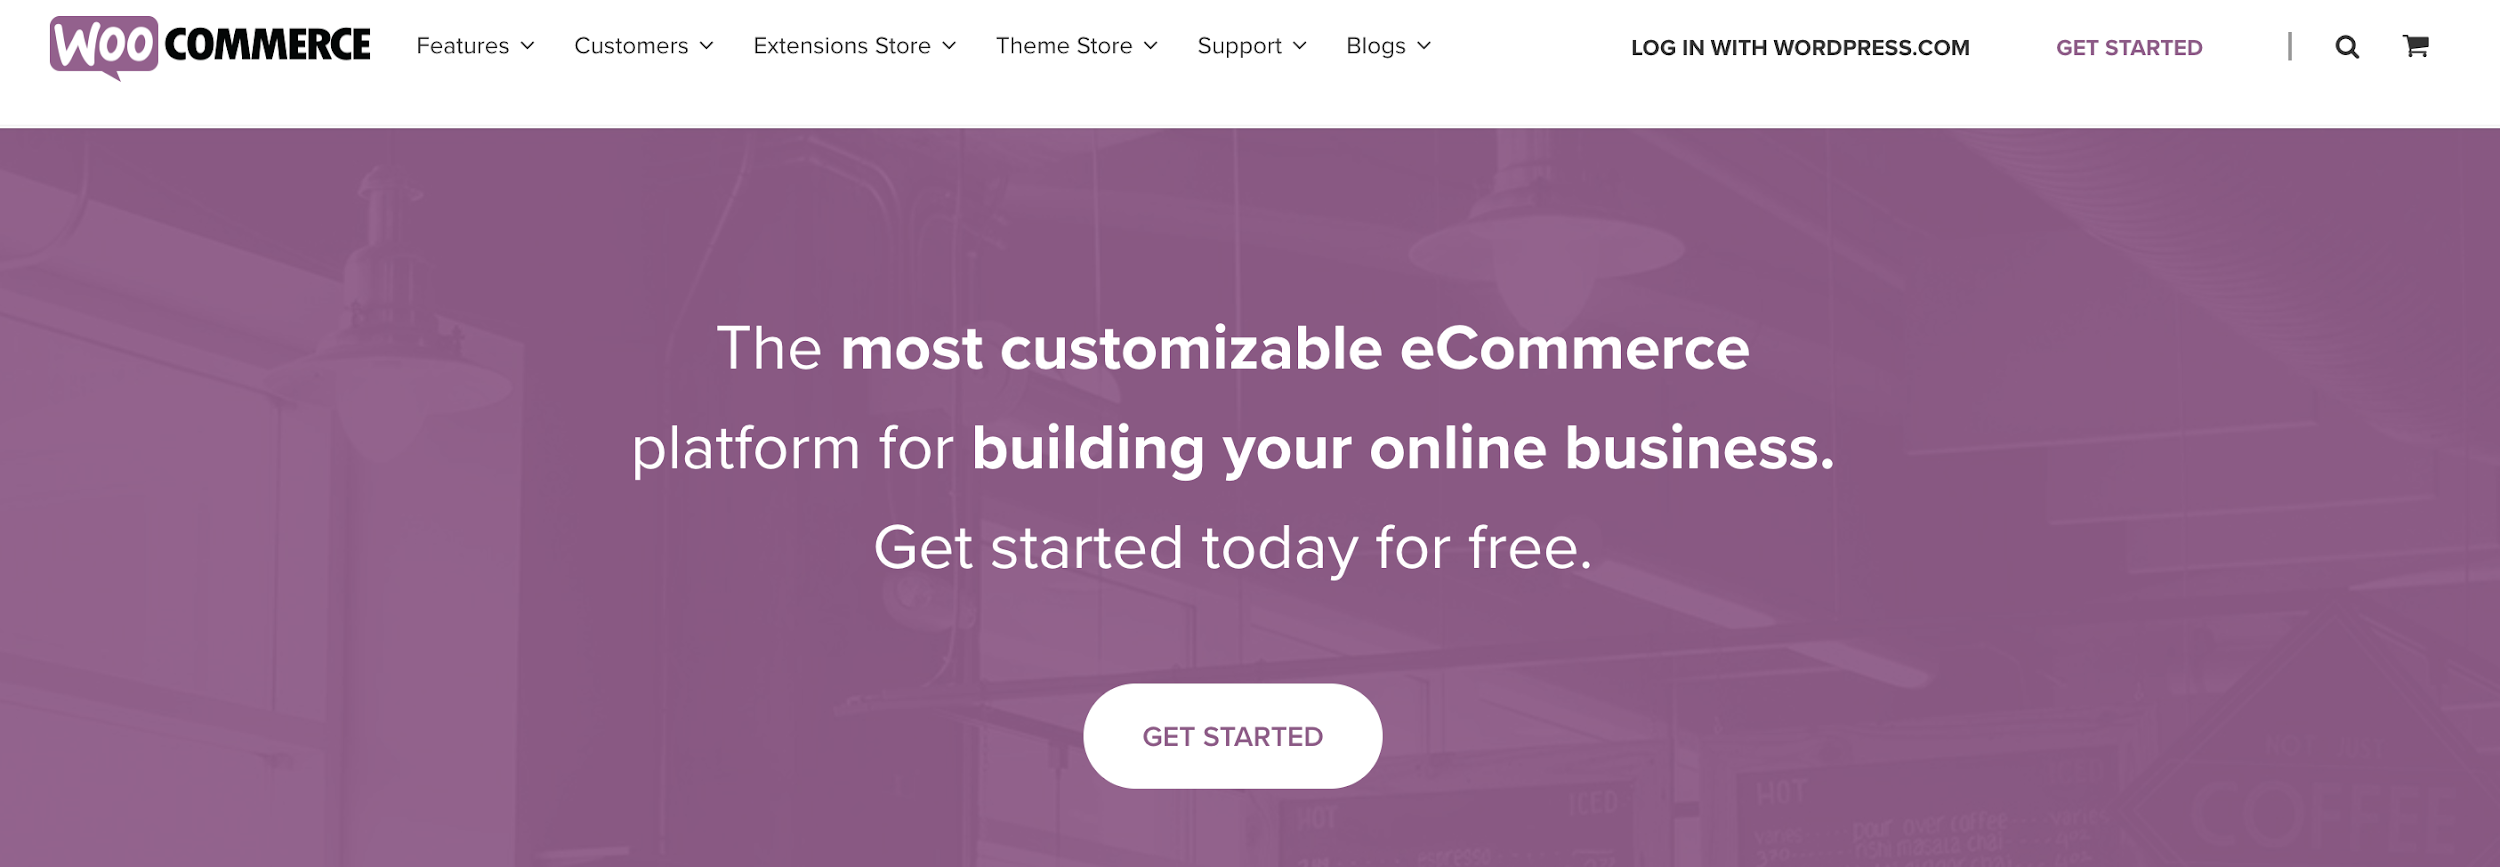 Woocommerce como exemplo de plataforma de ecommerce